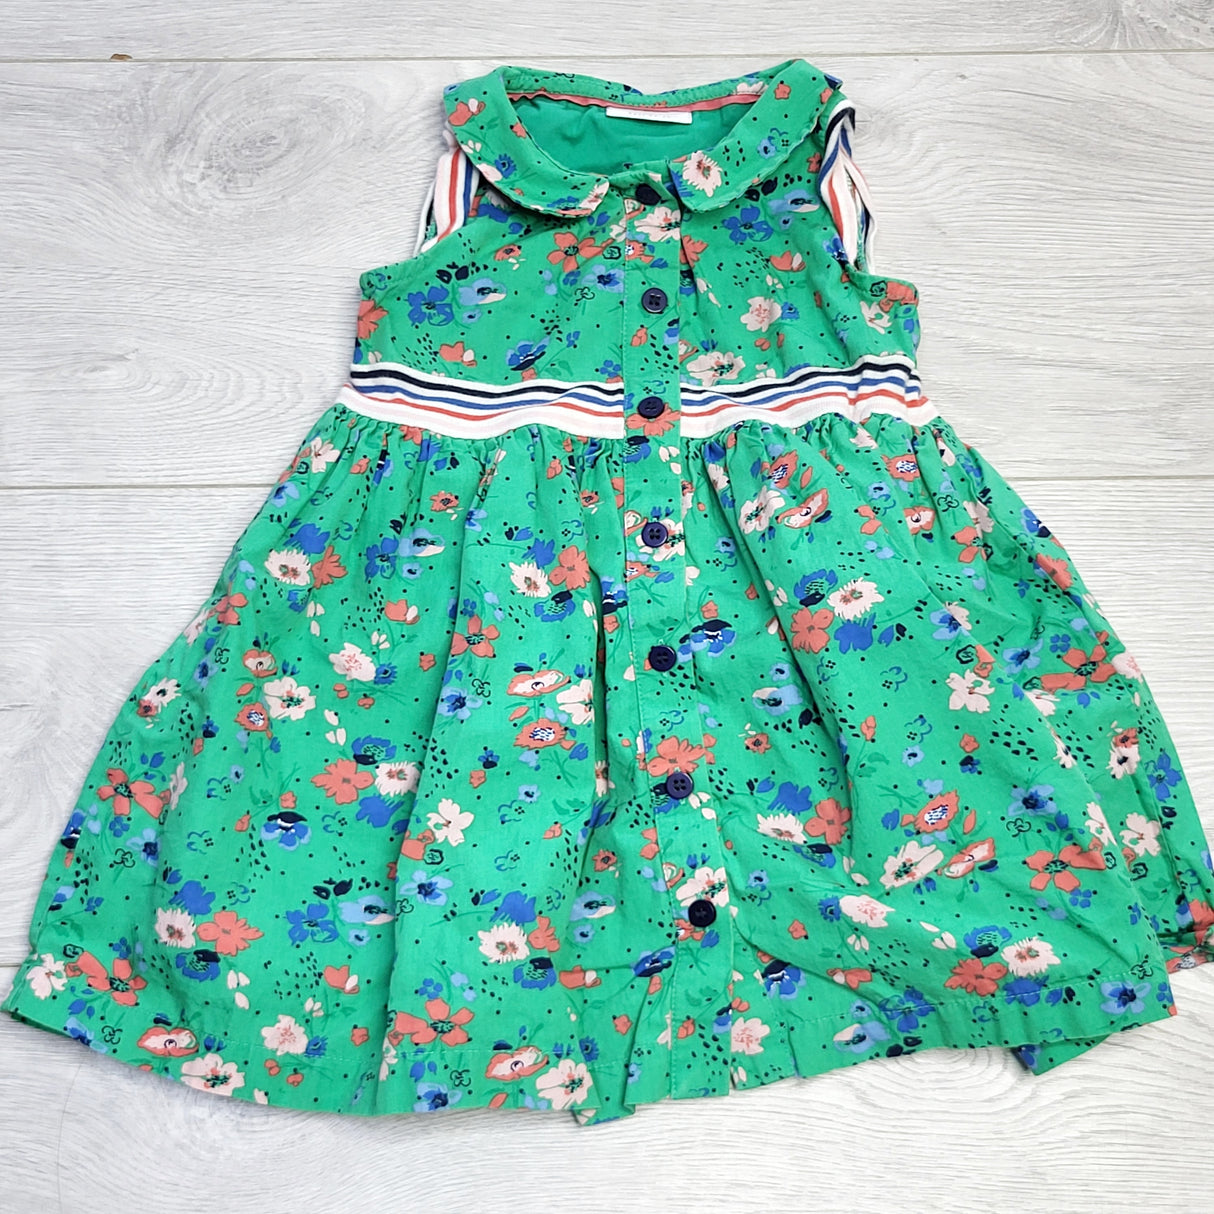 PS02 - Next green floral print dress, size 9-12 months, good condition